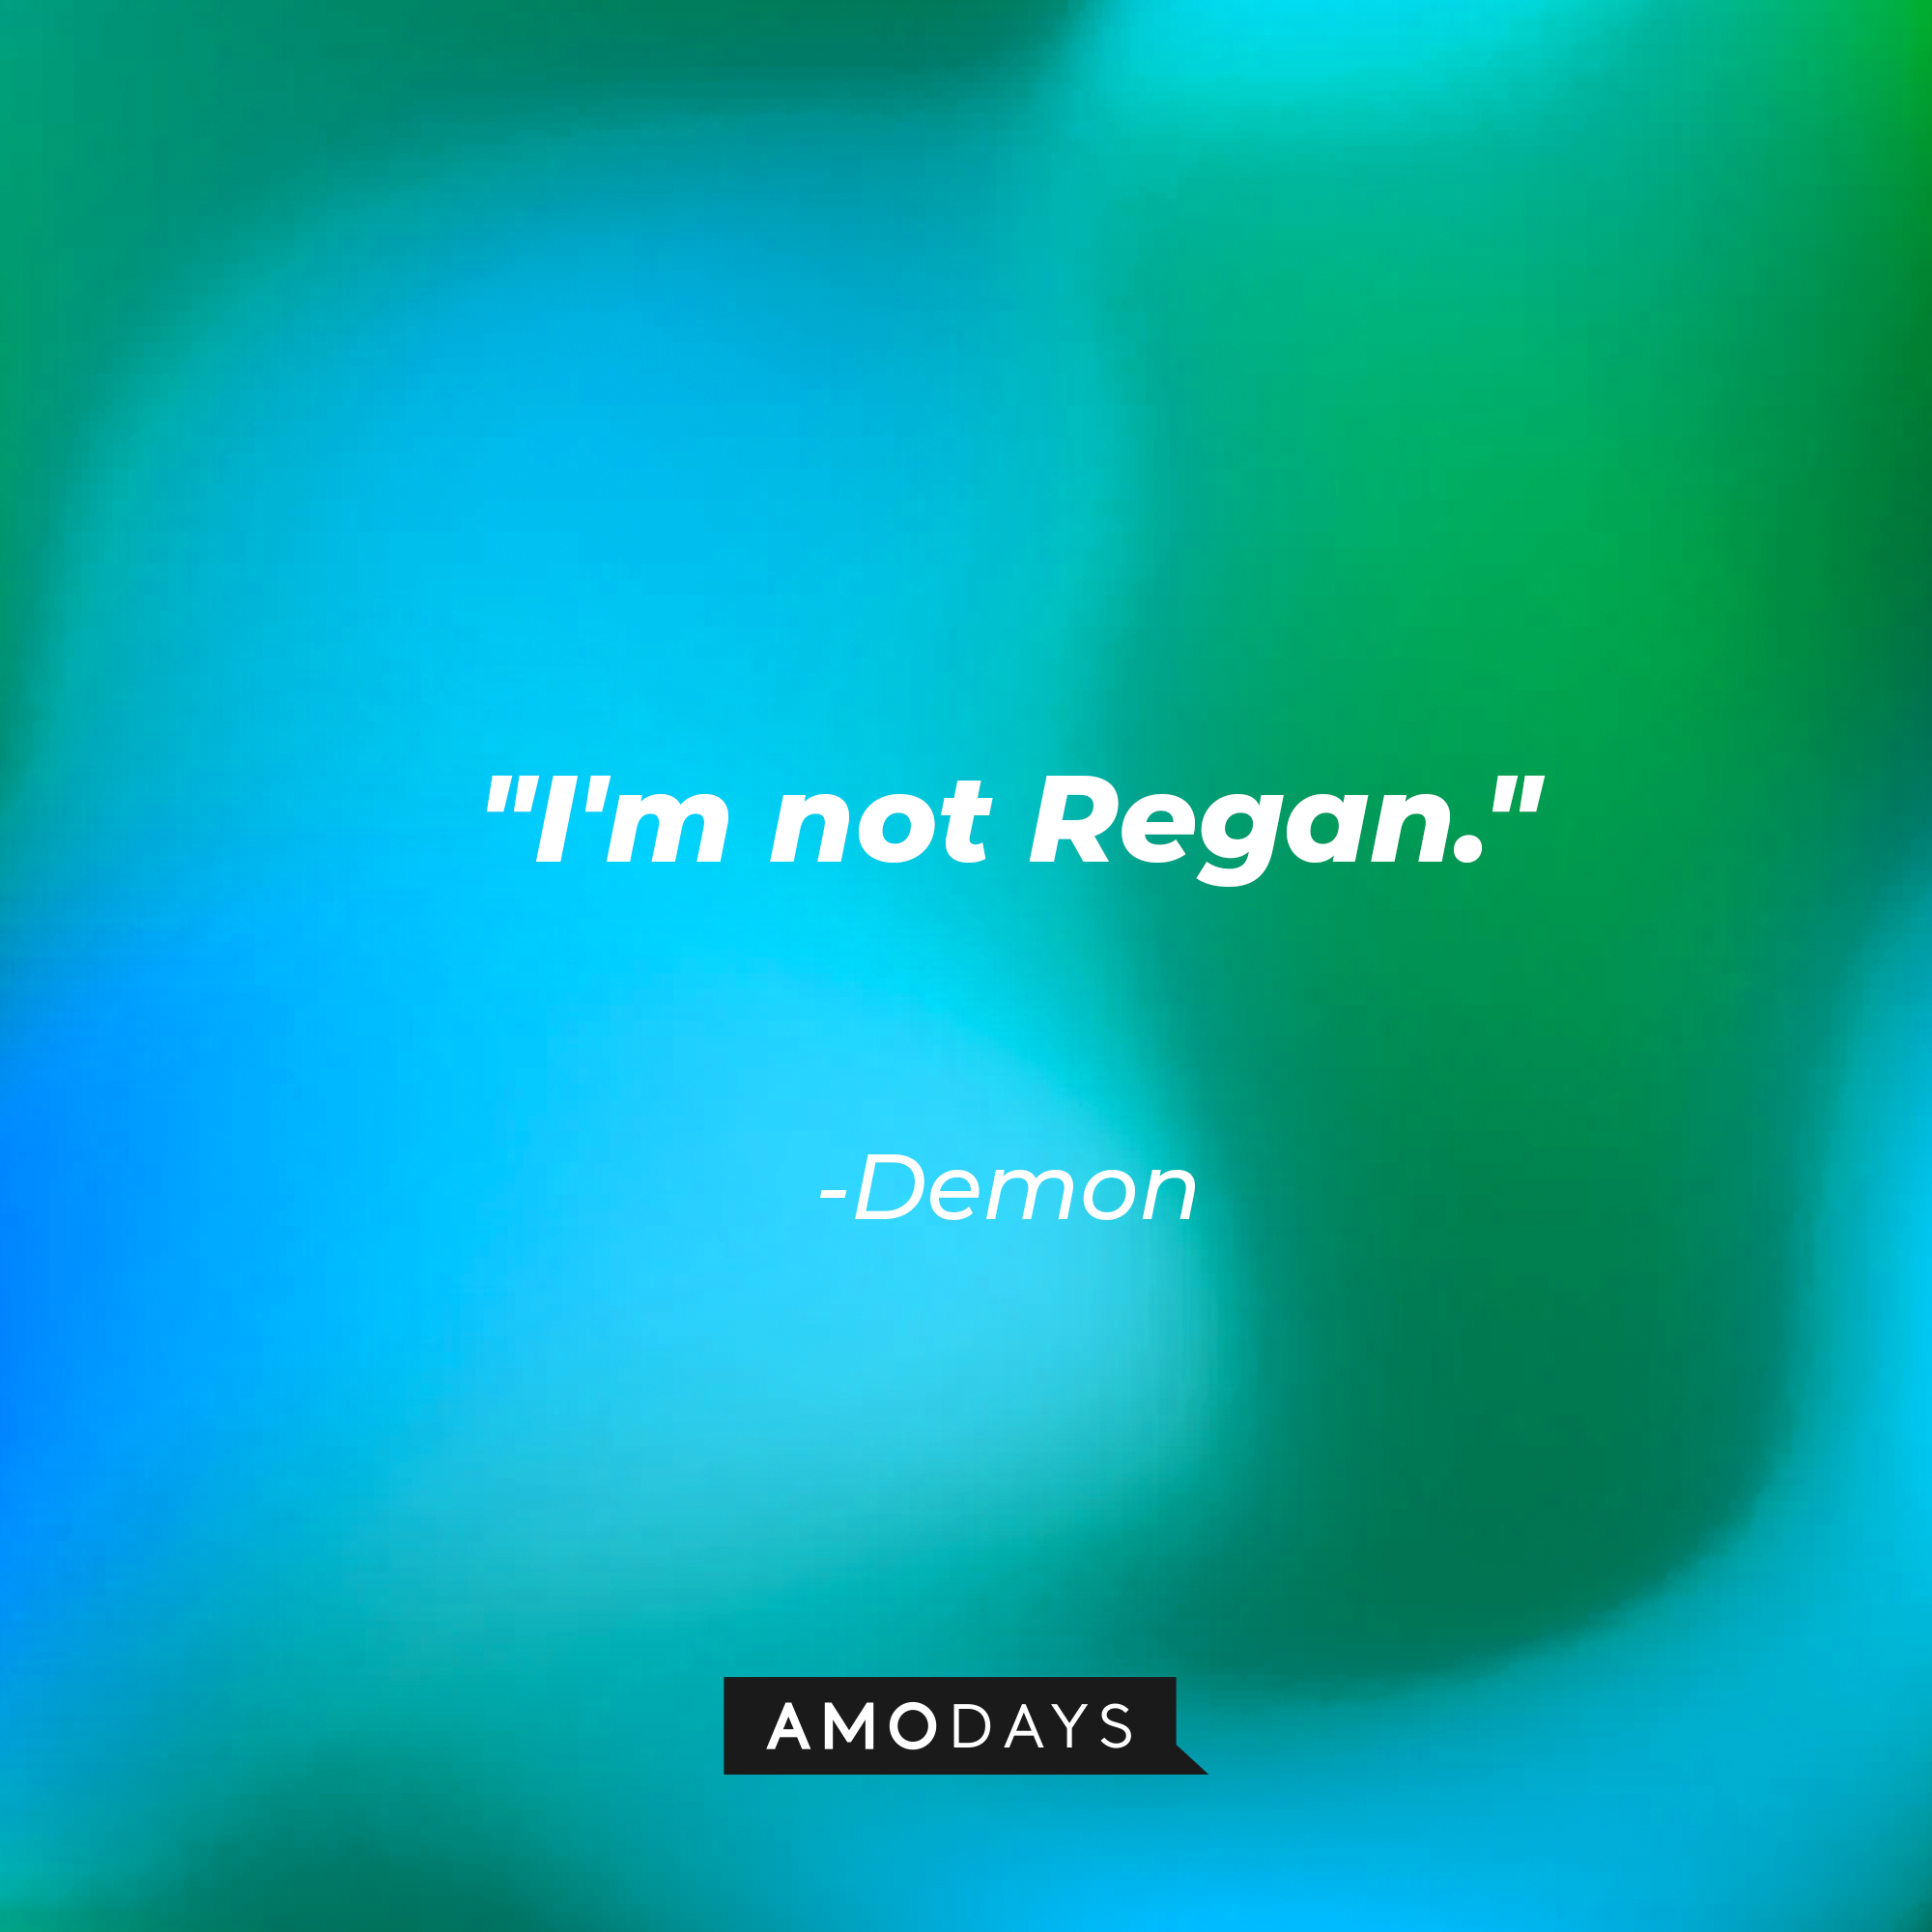 The Demon's quote: "I'm not Regan." | Source: AmoDAys